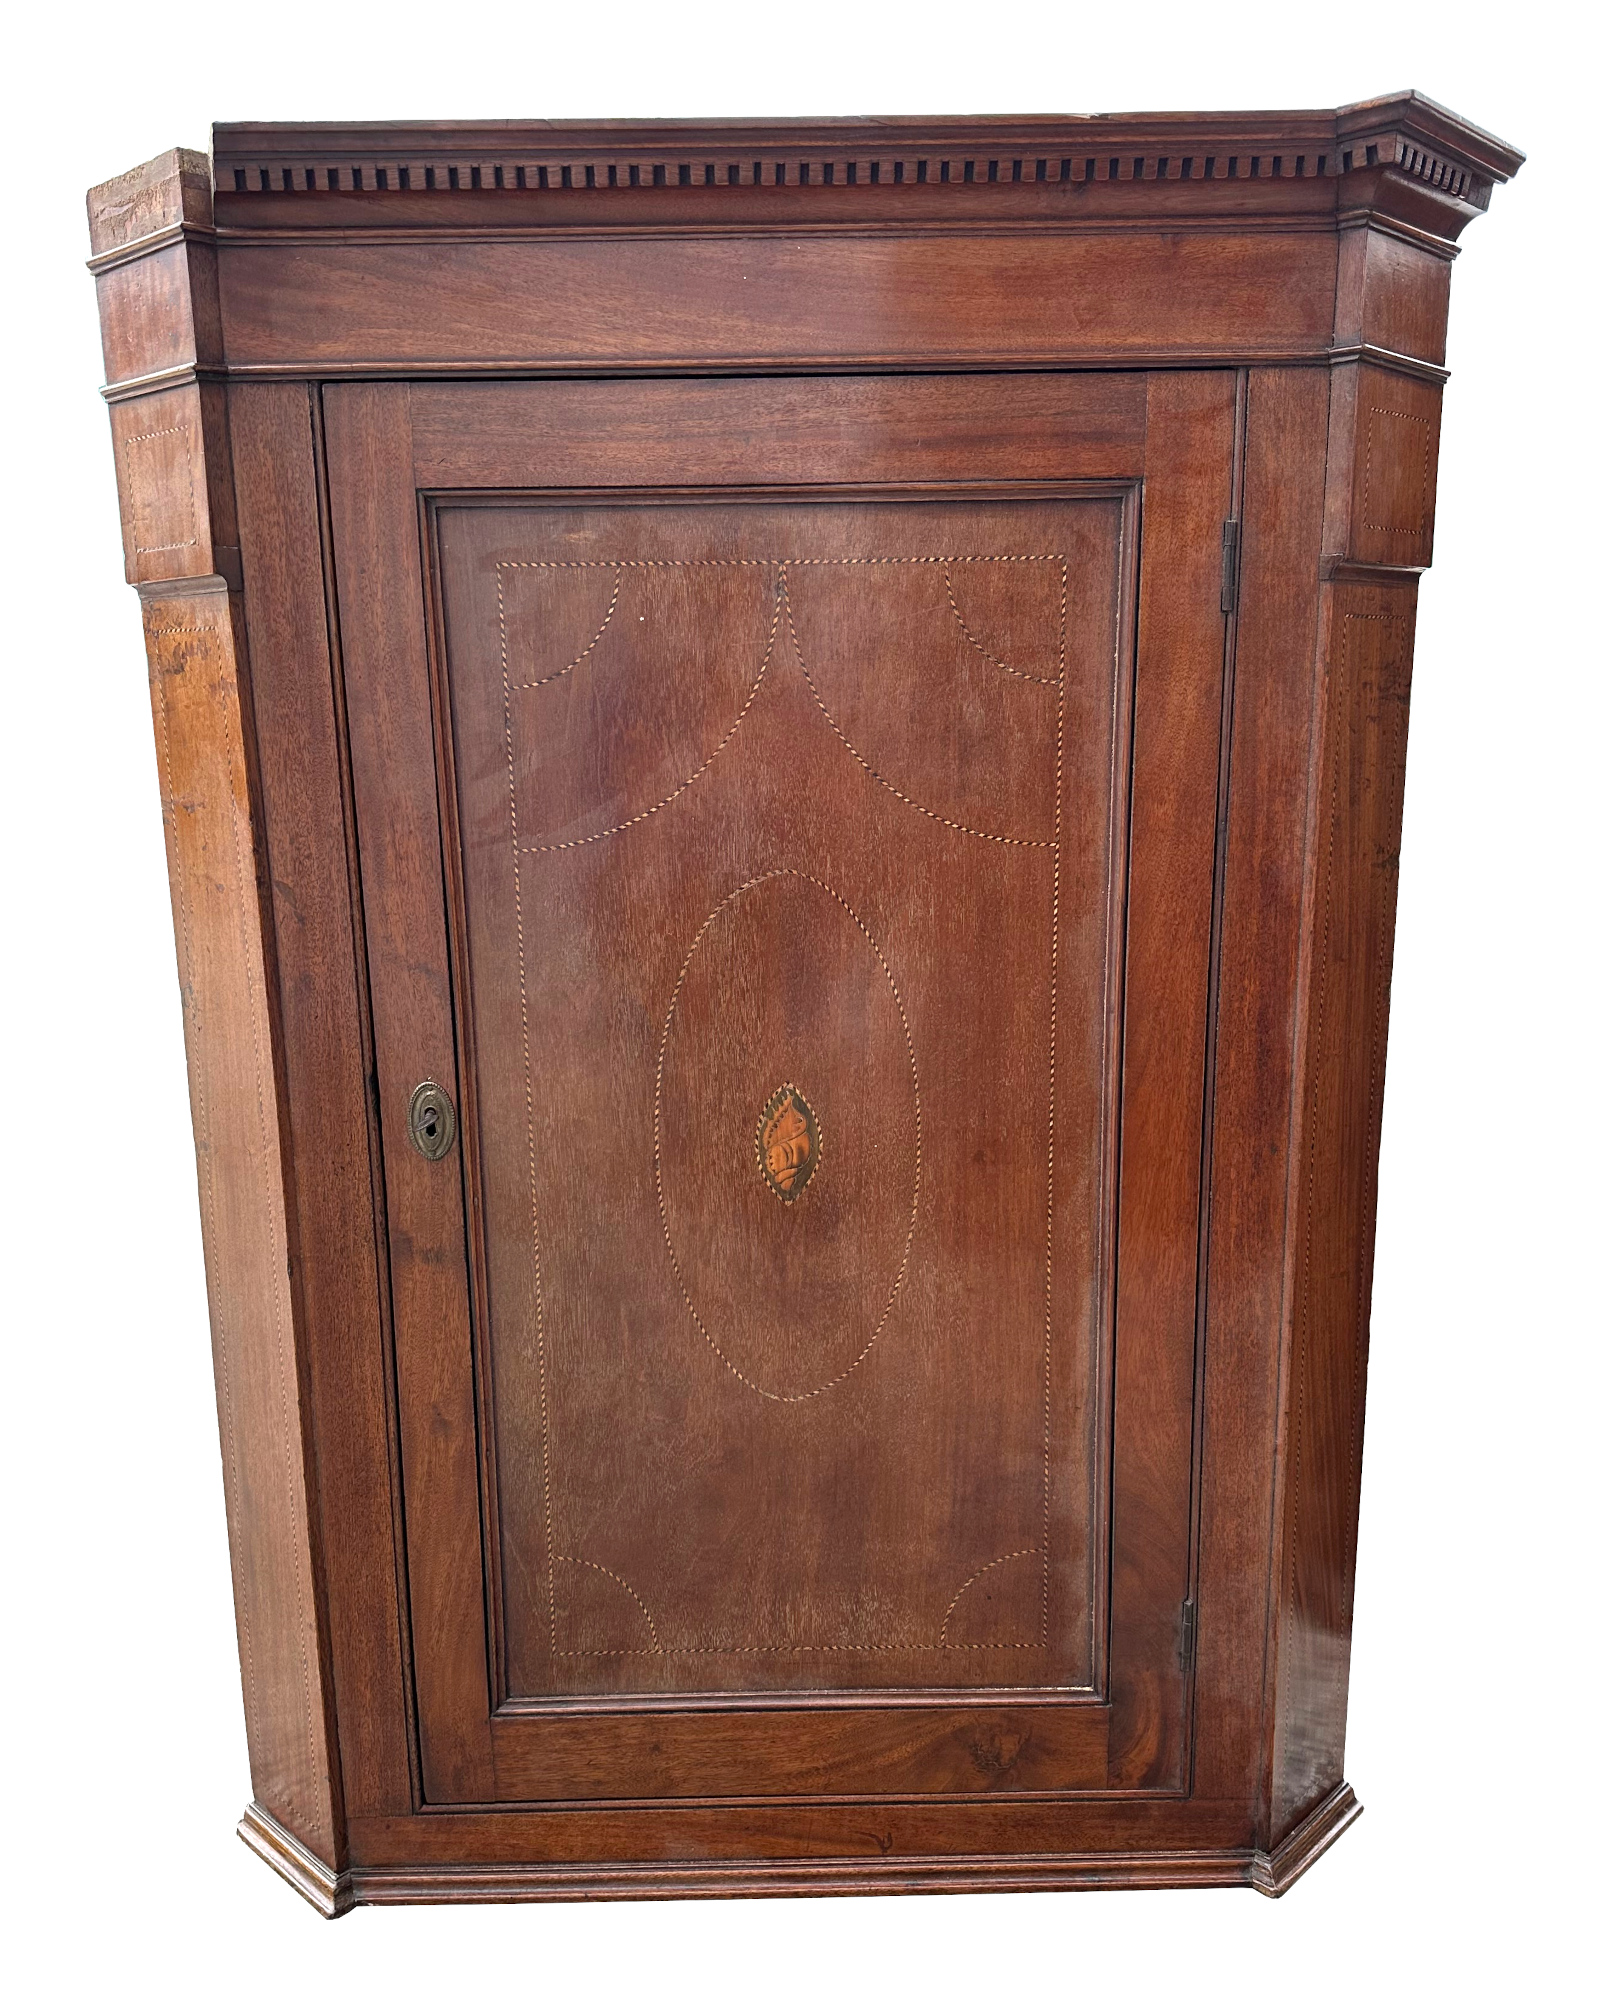 A George III oak hanging corner cabinet, having a panelled door enclosing shelves, 83cm wide. - Image 5 of 5